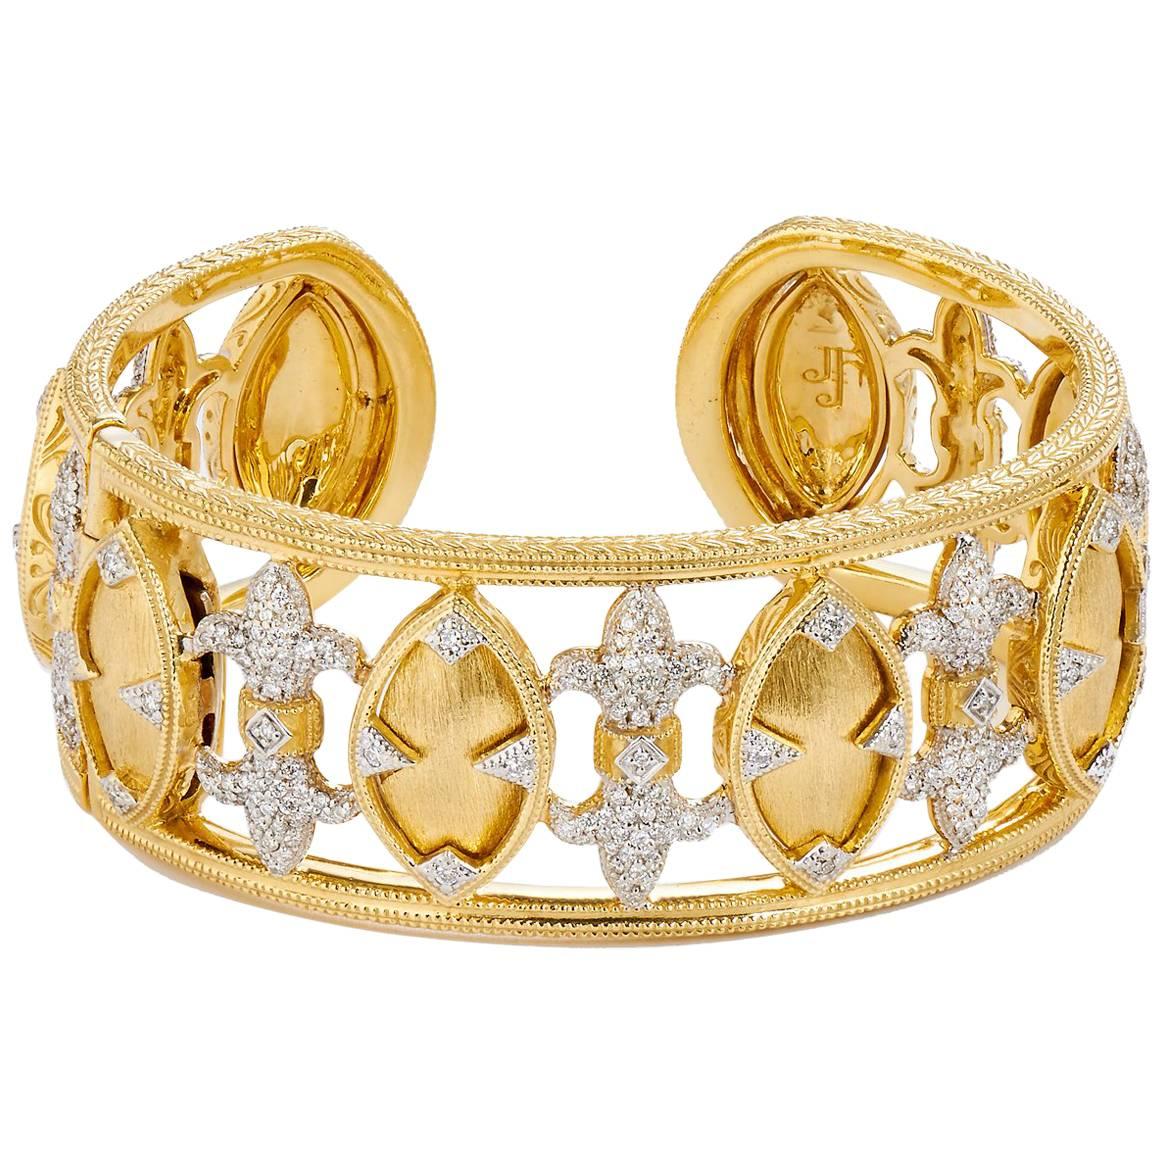 Jude Frances Marquis Fleur 2.28 carat Diamond and 18 karat Gold Cuff Bracelet